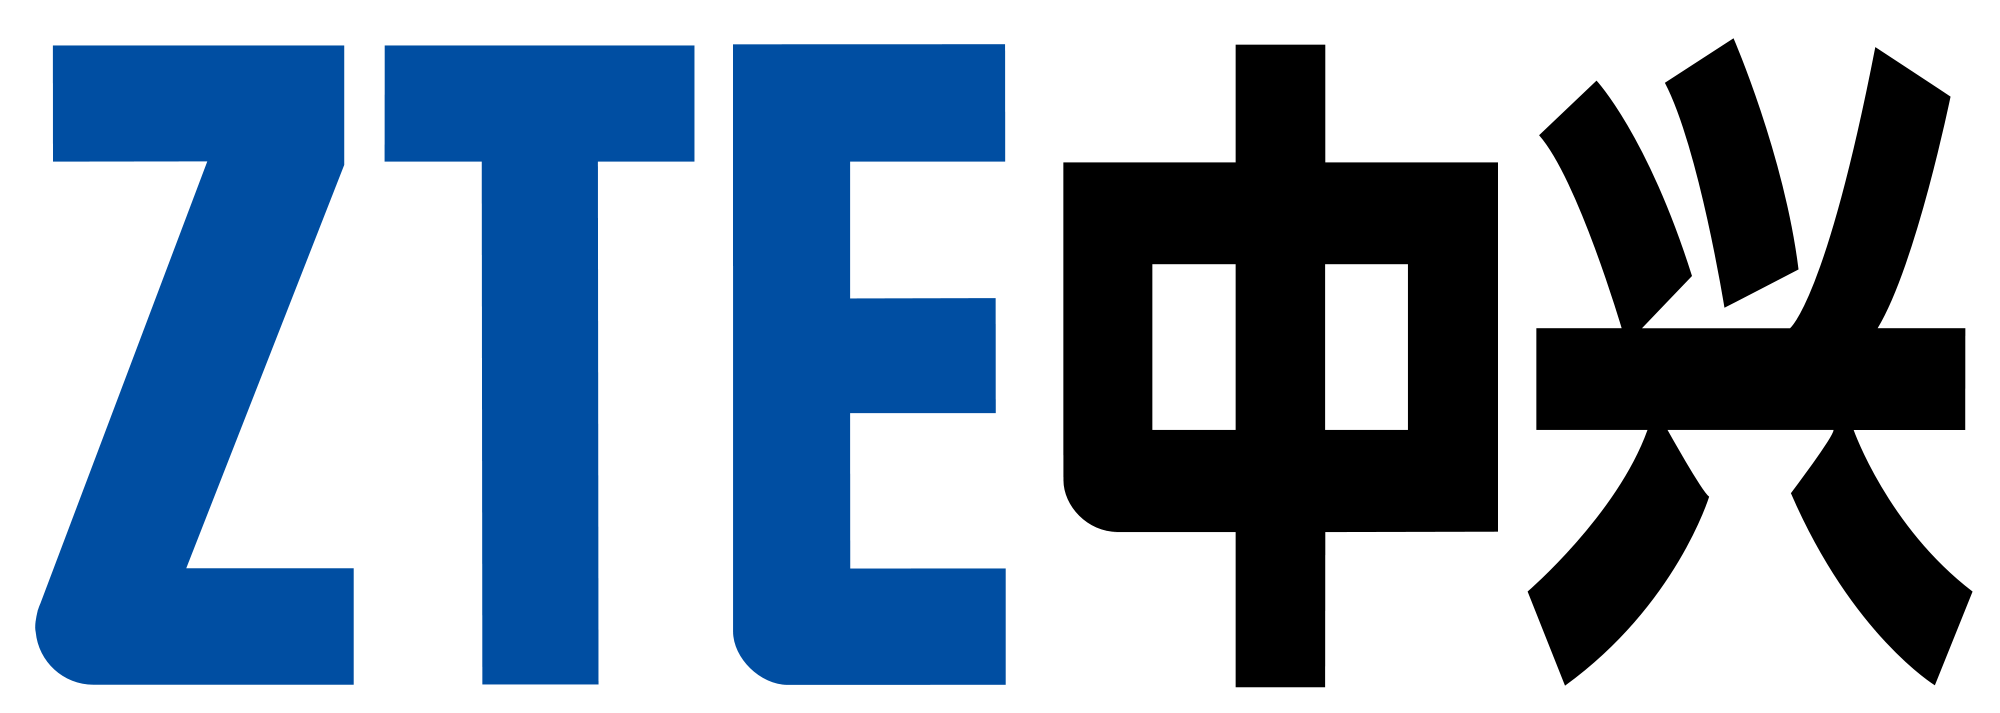 ZTE Logo - File:ZTE logo.svg - Wikimedia Commons